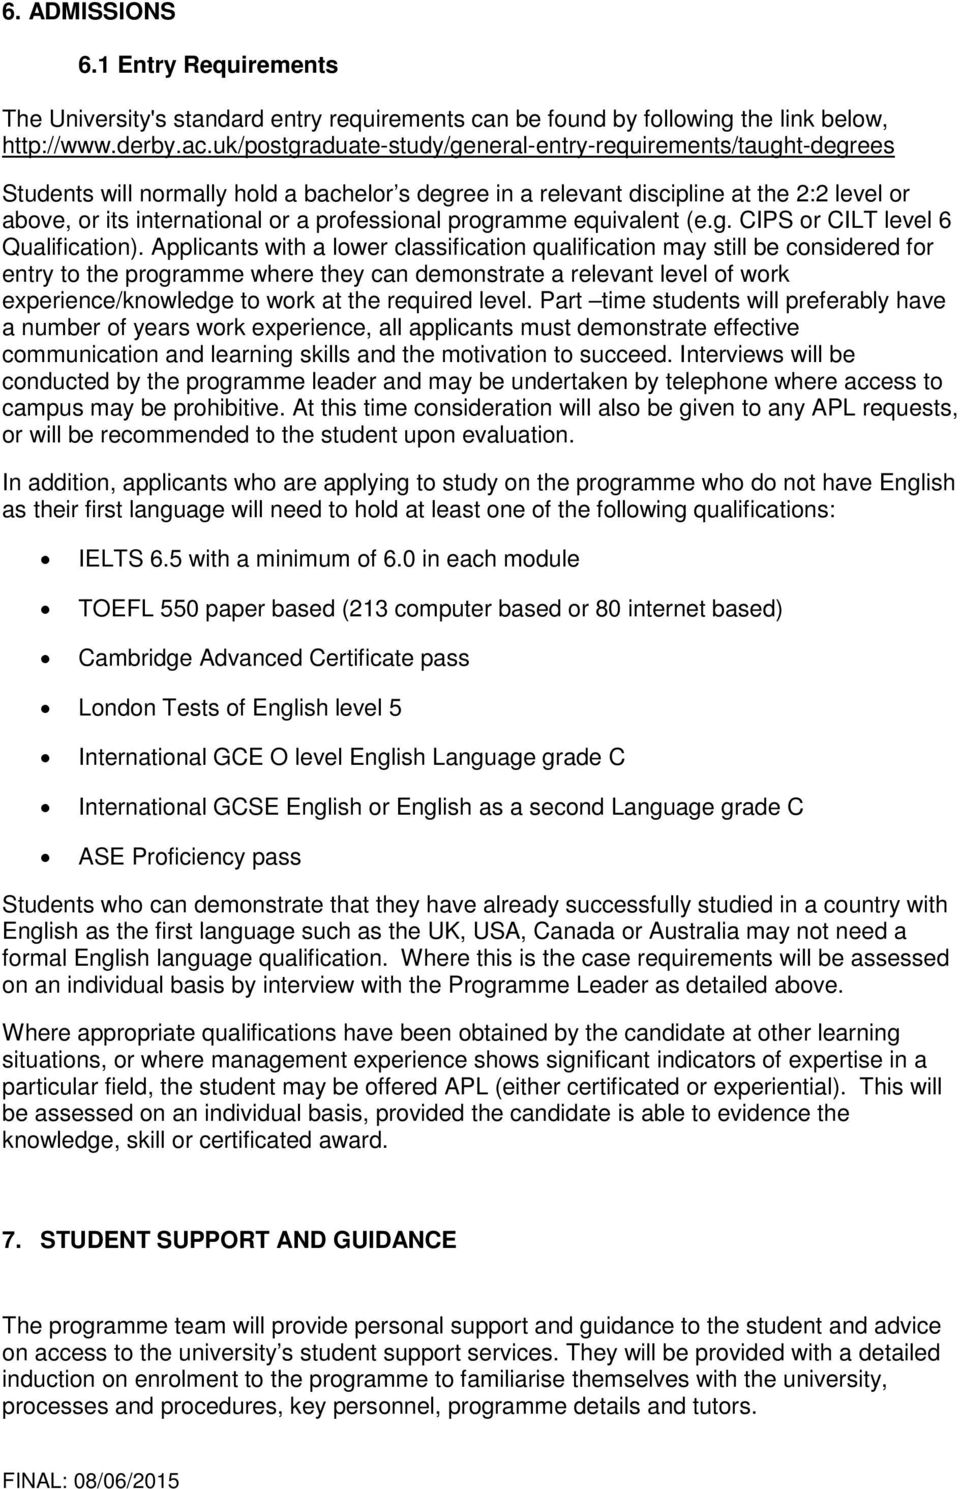 professional programme equivalent (e.g. CIPS or CILT level 6 Qualification).